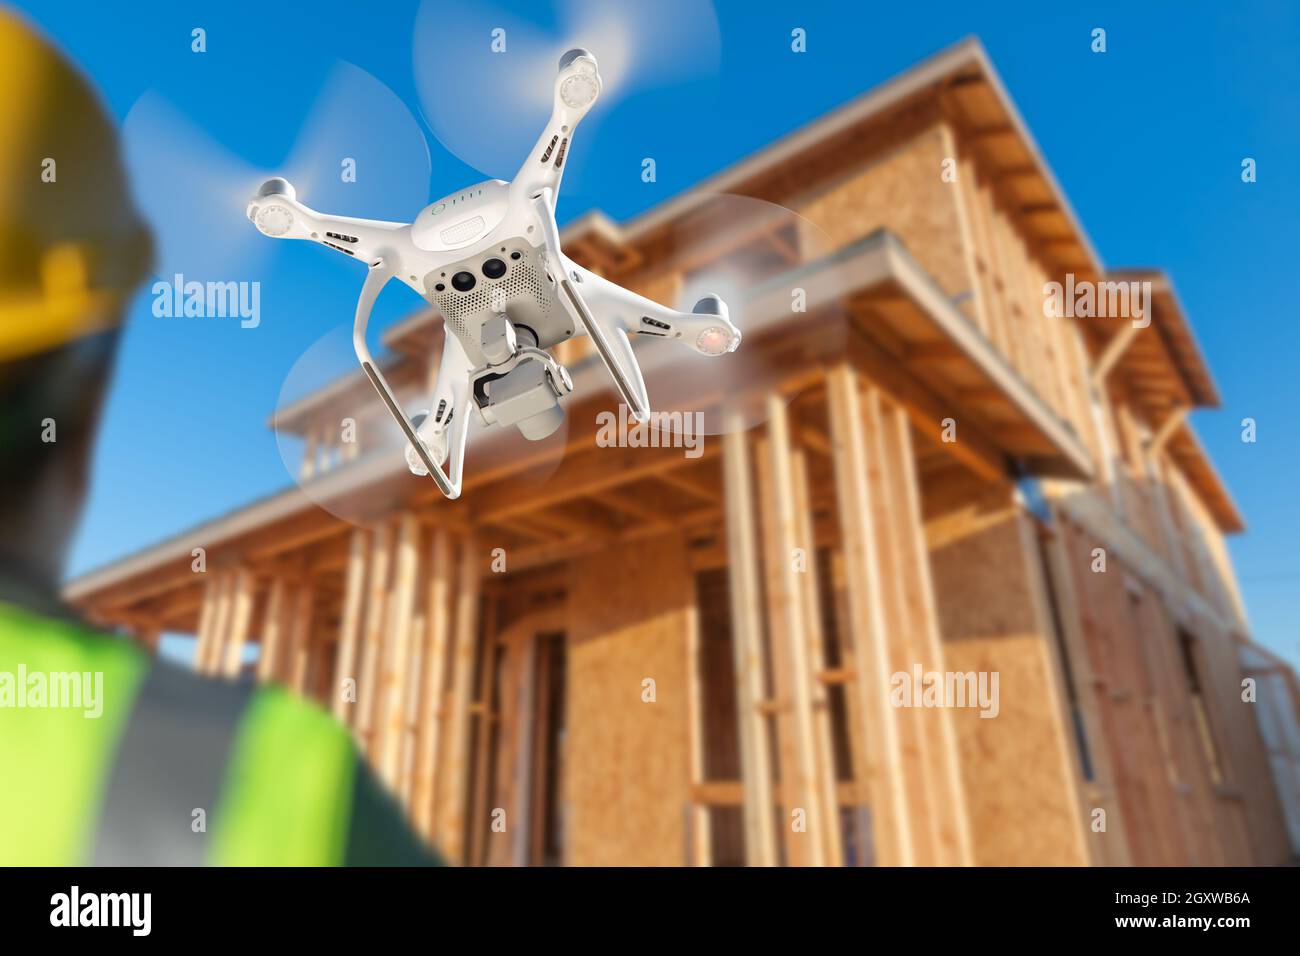 Pilot Flies Drone Quadcopter Inspecting Home Construction Site. Stock Photo